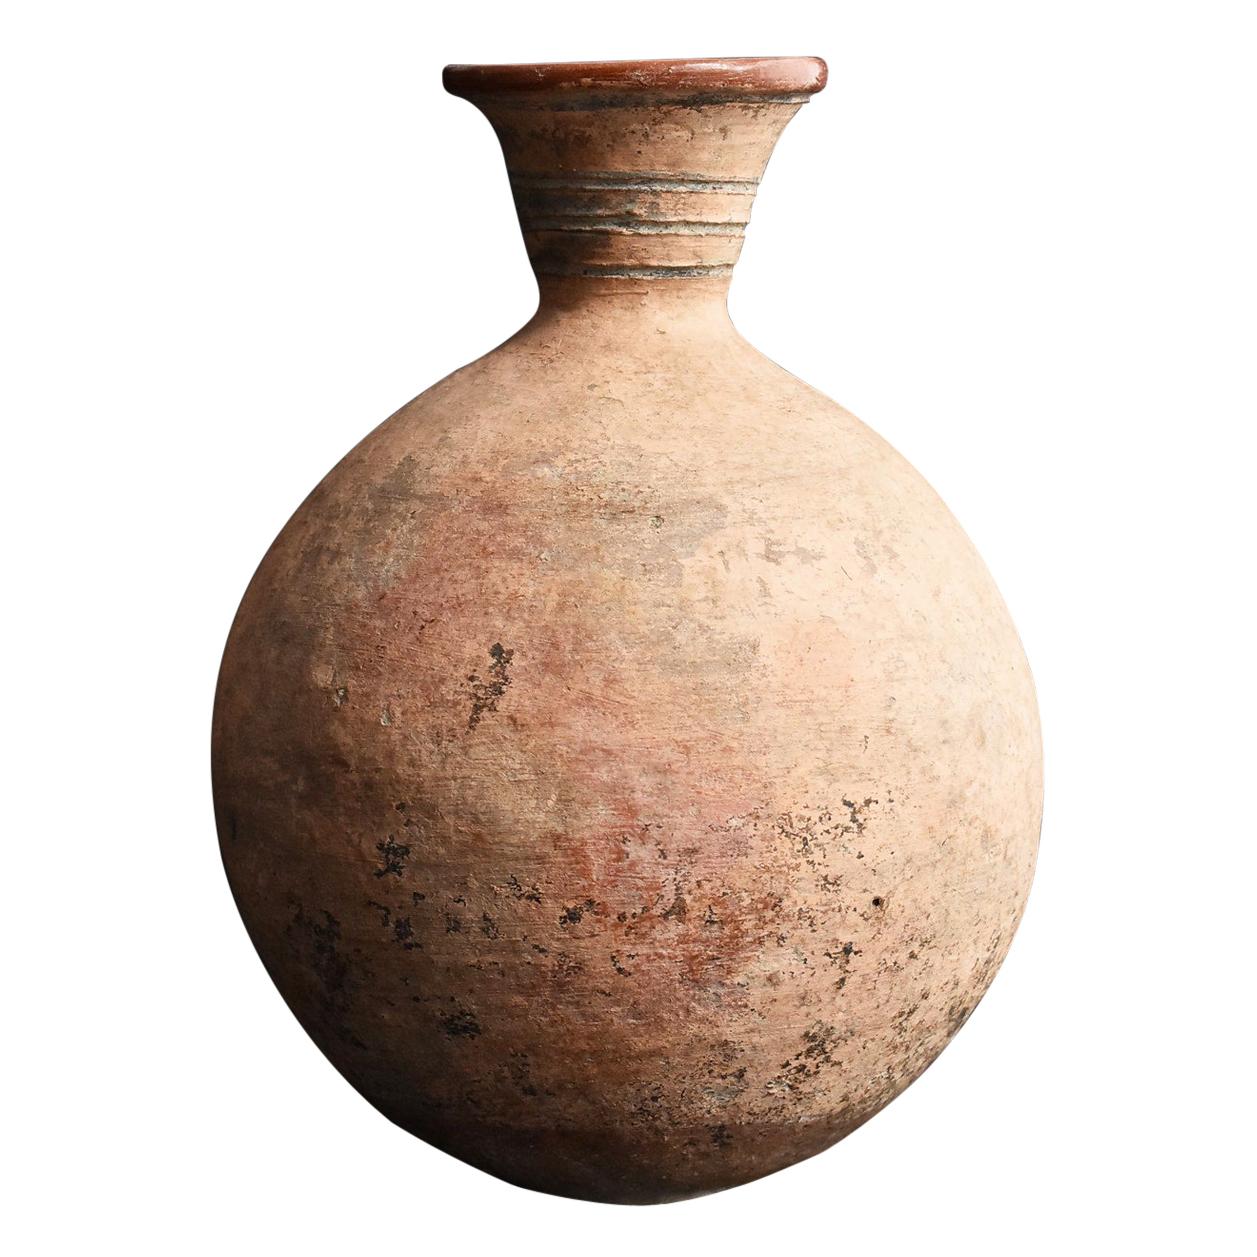 Excavated Earthenware Antike Vasen / Gefäß / Indus oder Andean Civilizations